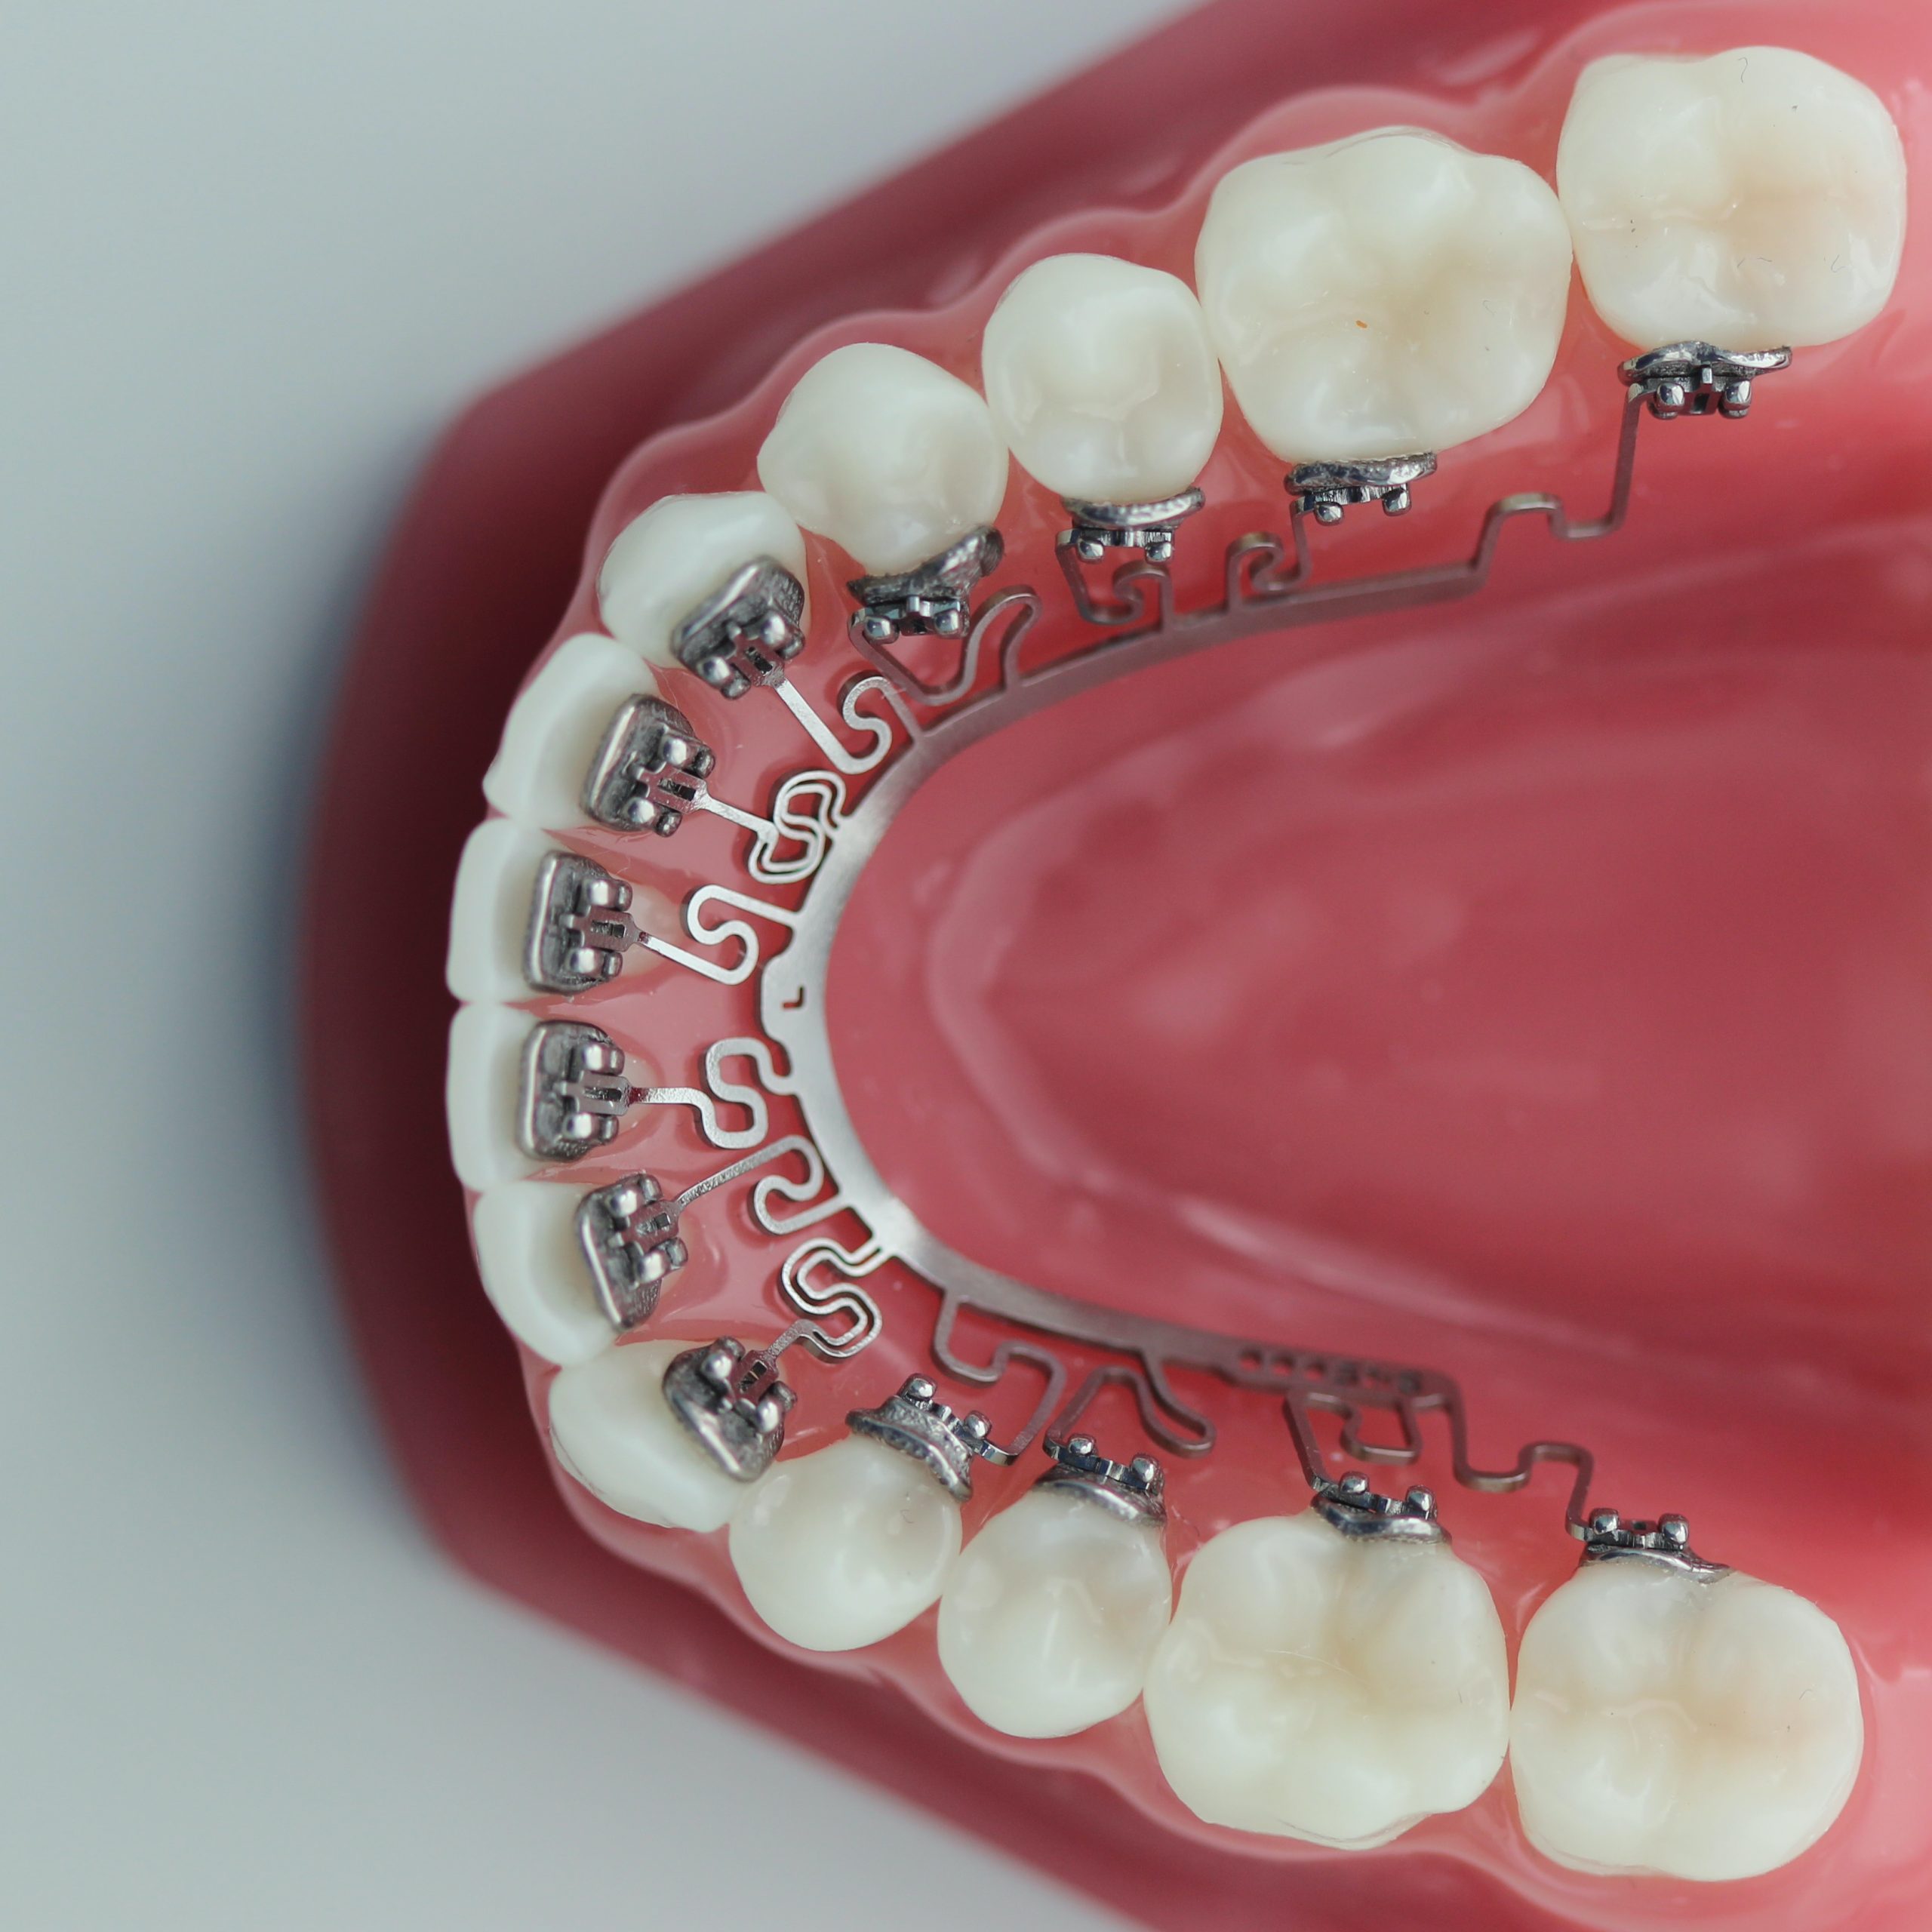 Introducing Brava – the new way to straighten teeth